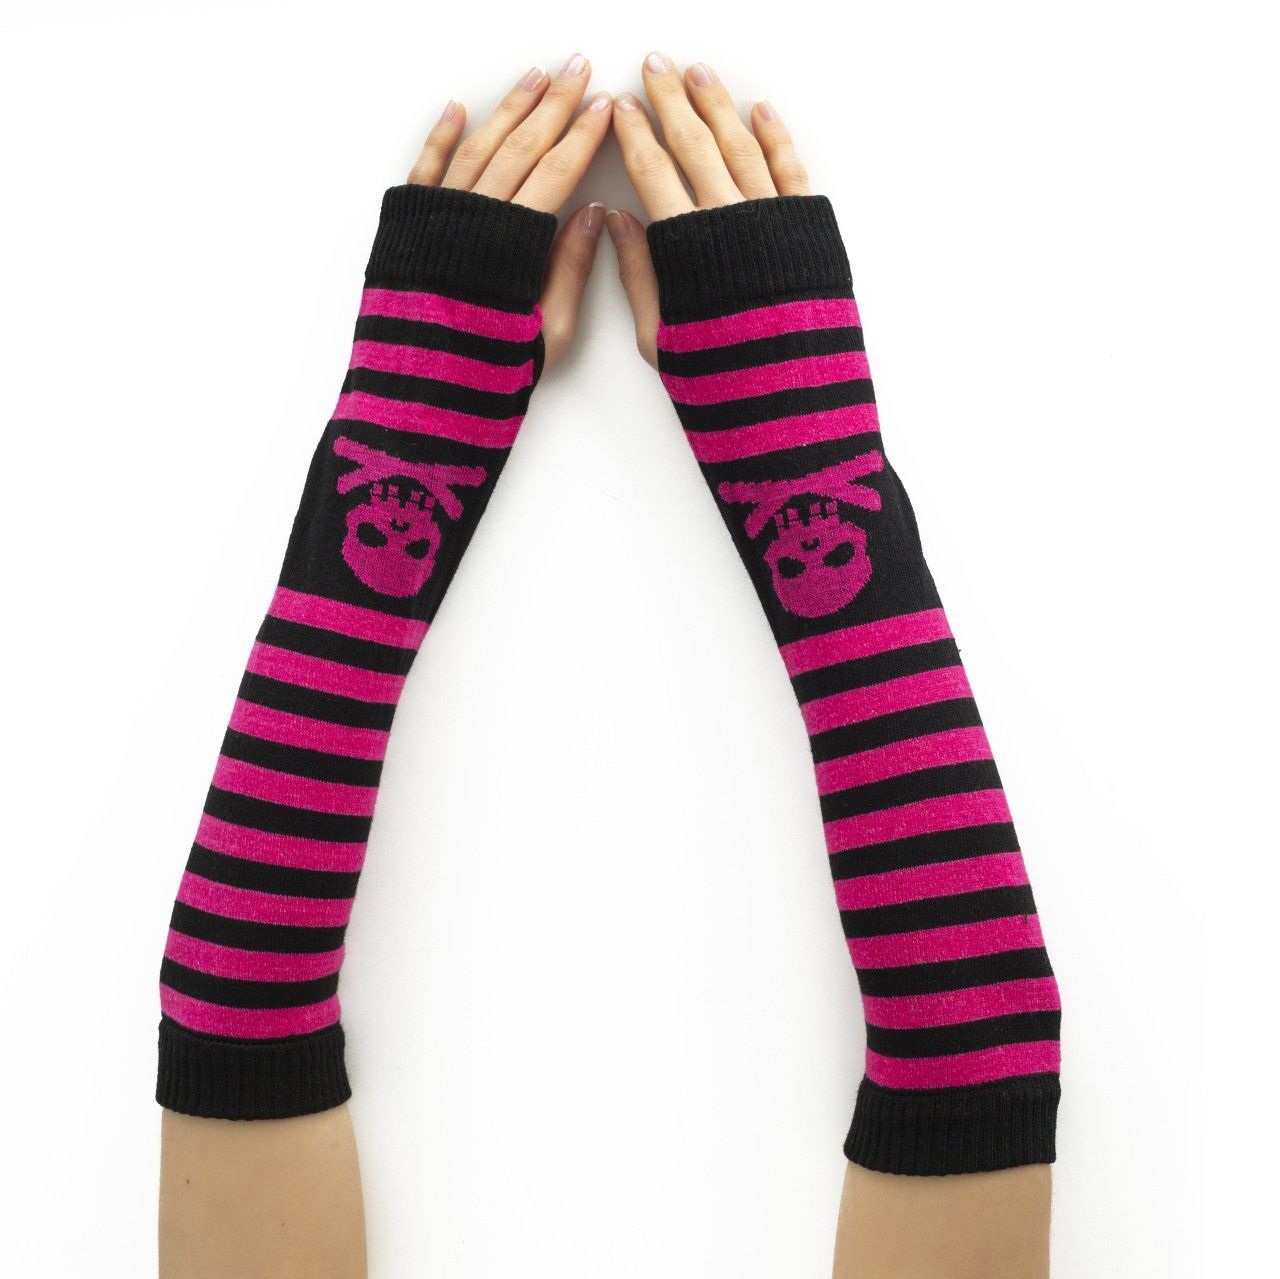 Siyah Pembe Renkli Kol Çorabı Eldiven